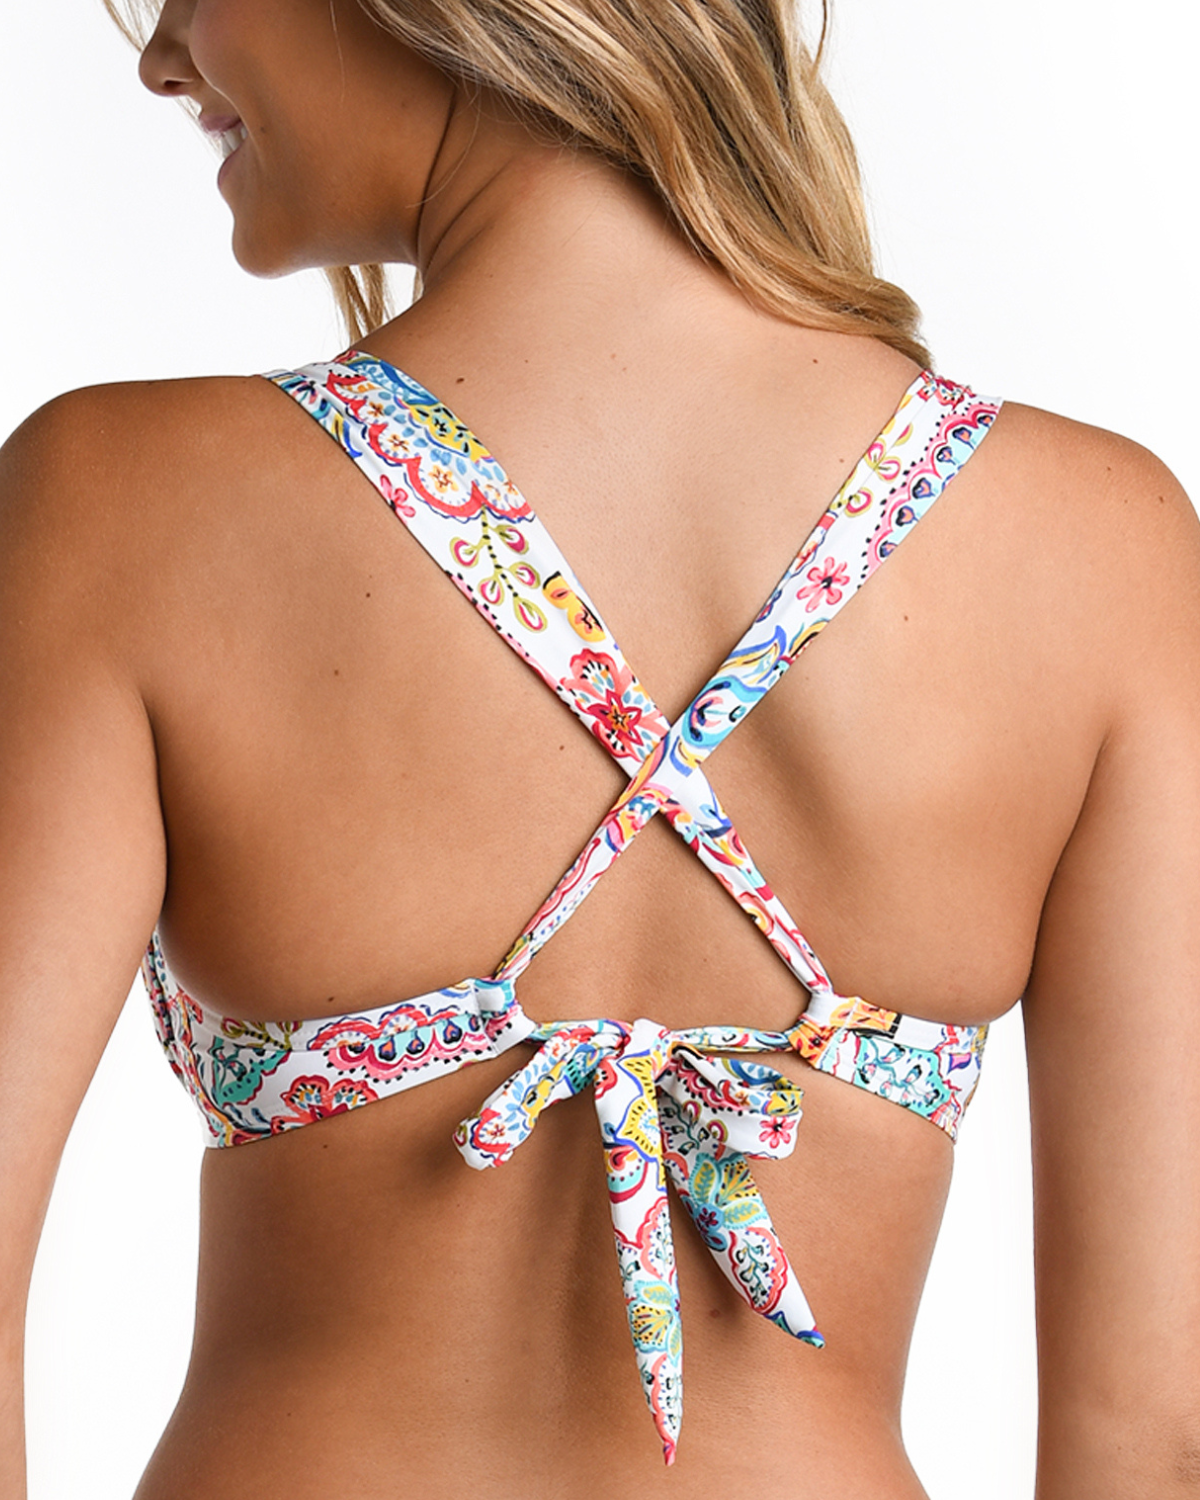 Model wearing an underwire bikini top in a white multicolored gypsy floral print